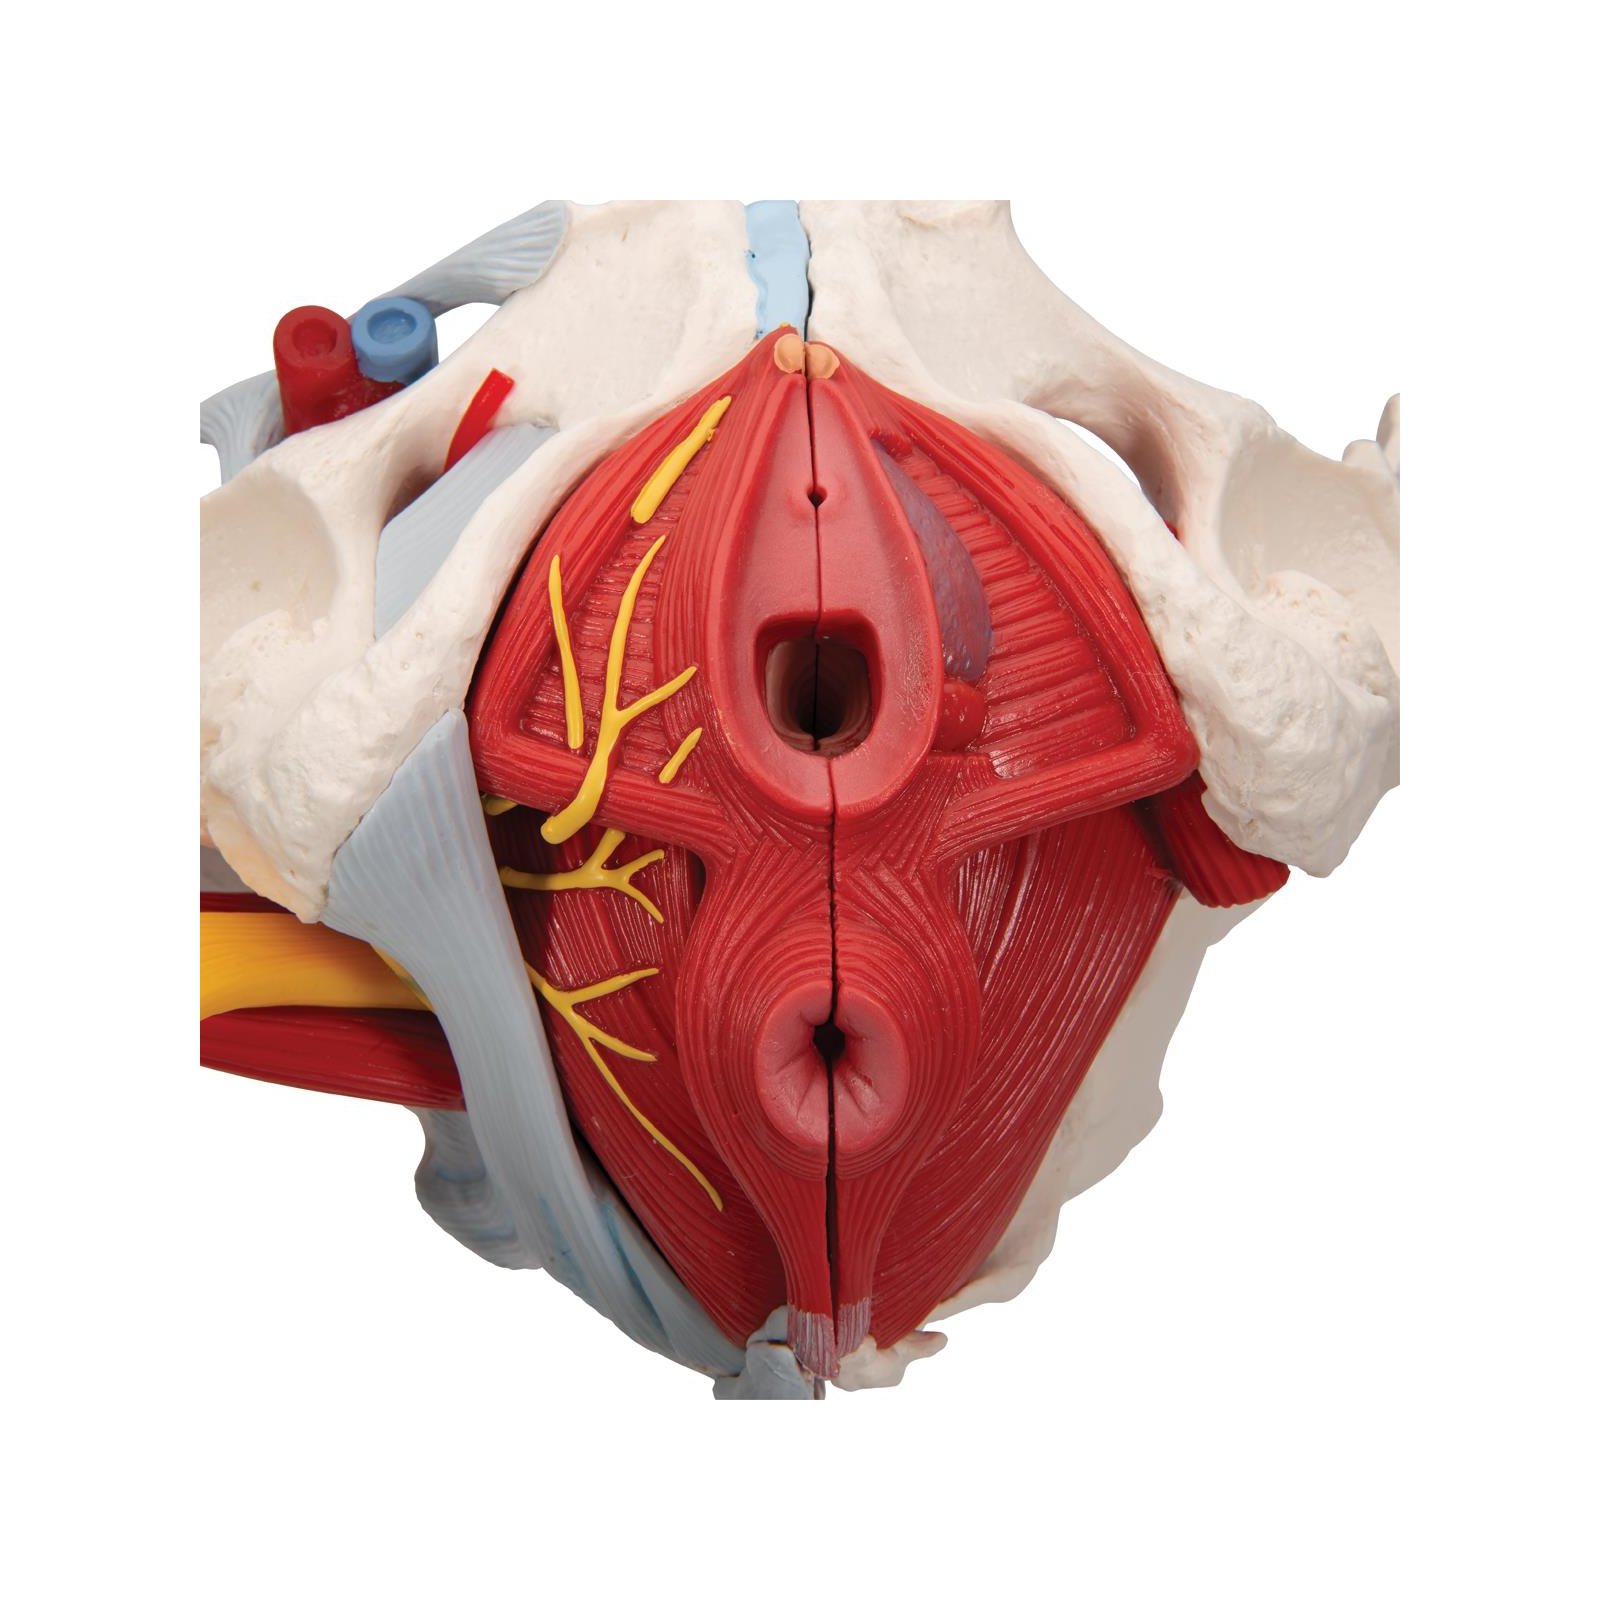 Female Pelvis With Ligaments Vessels Nerves Pelvic Floor Organs 6